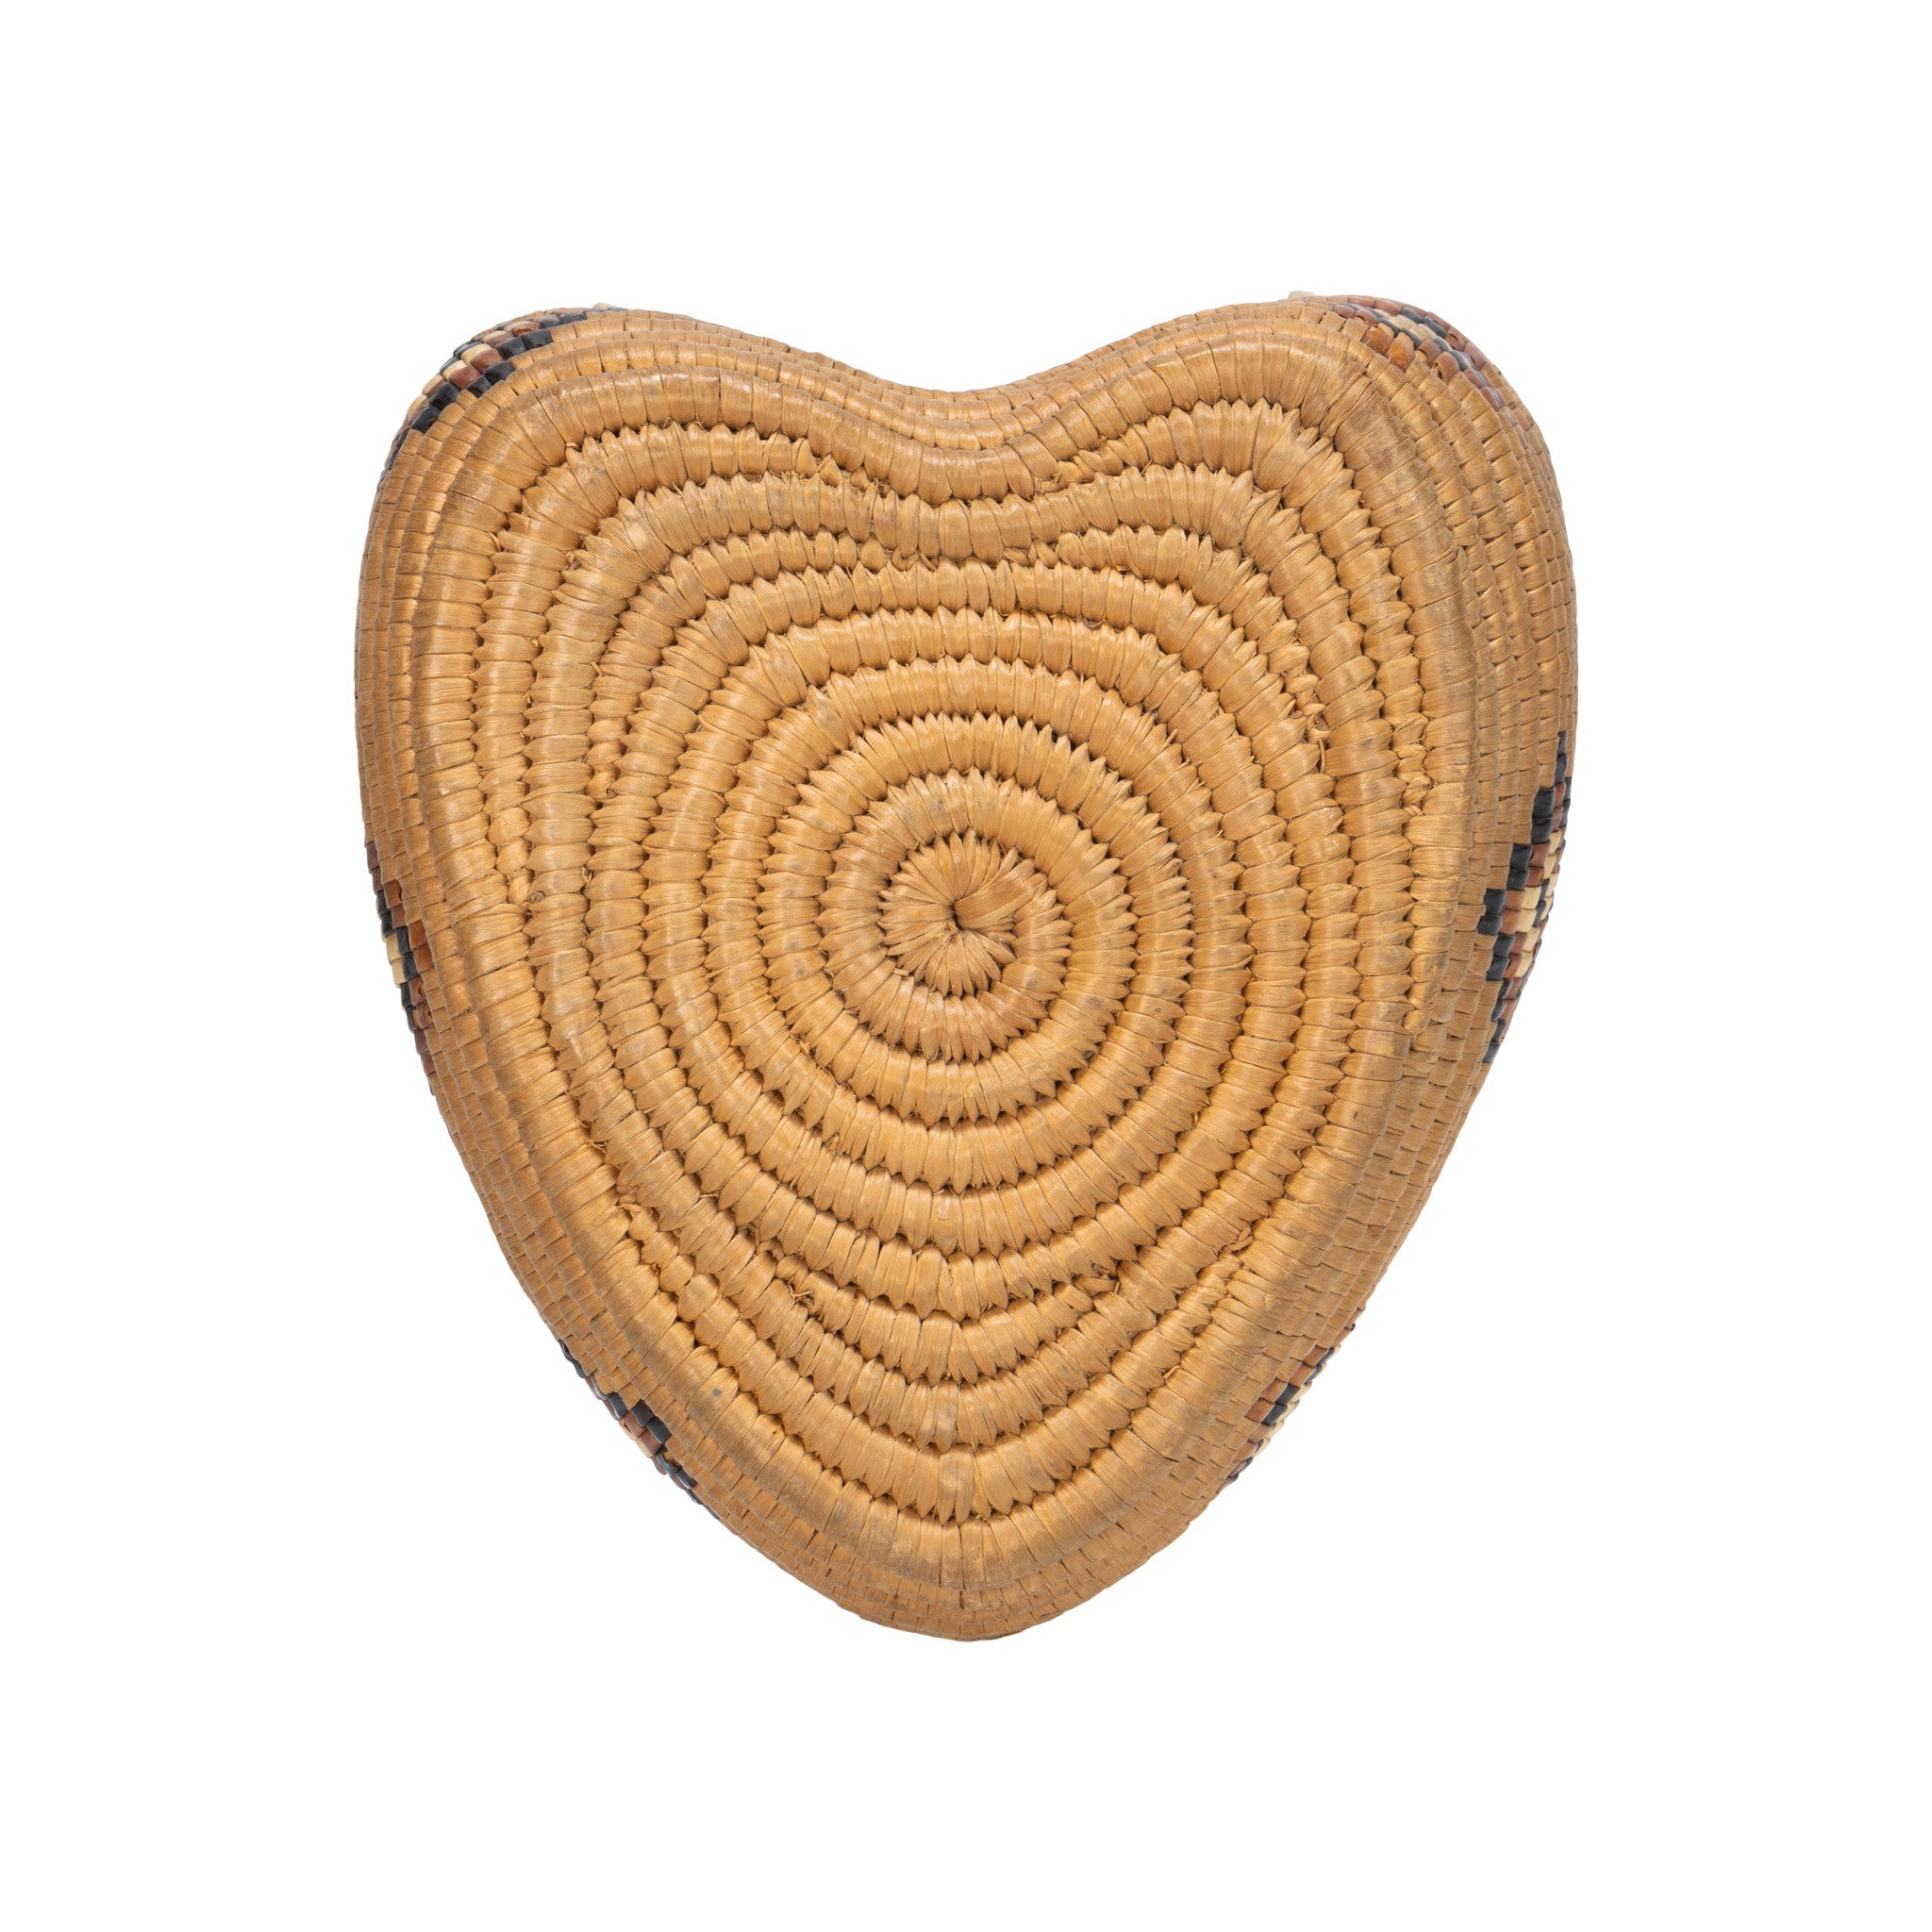 Heart Shaped Lillooet Coiled Basket